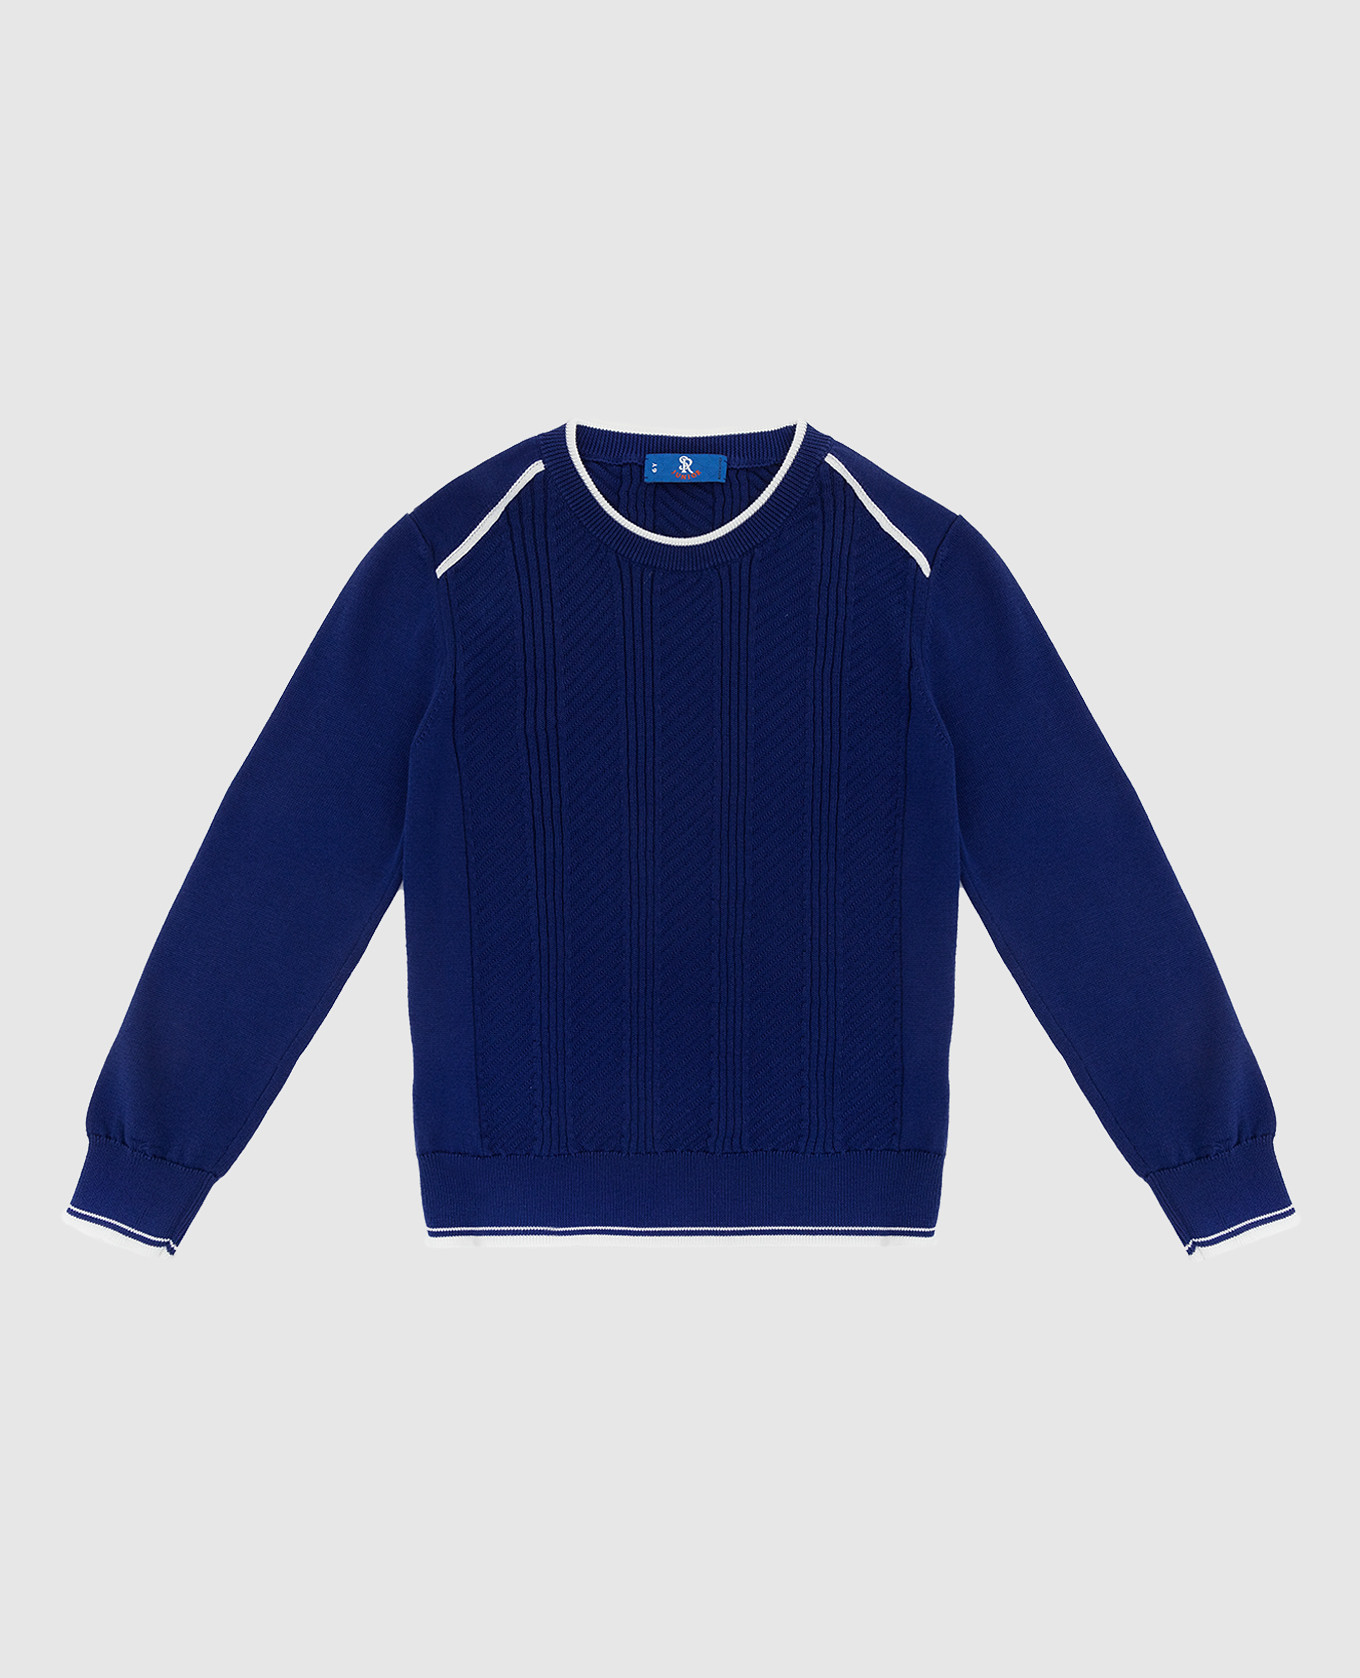 Children's blue jumper with a pattern